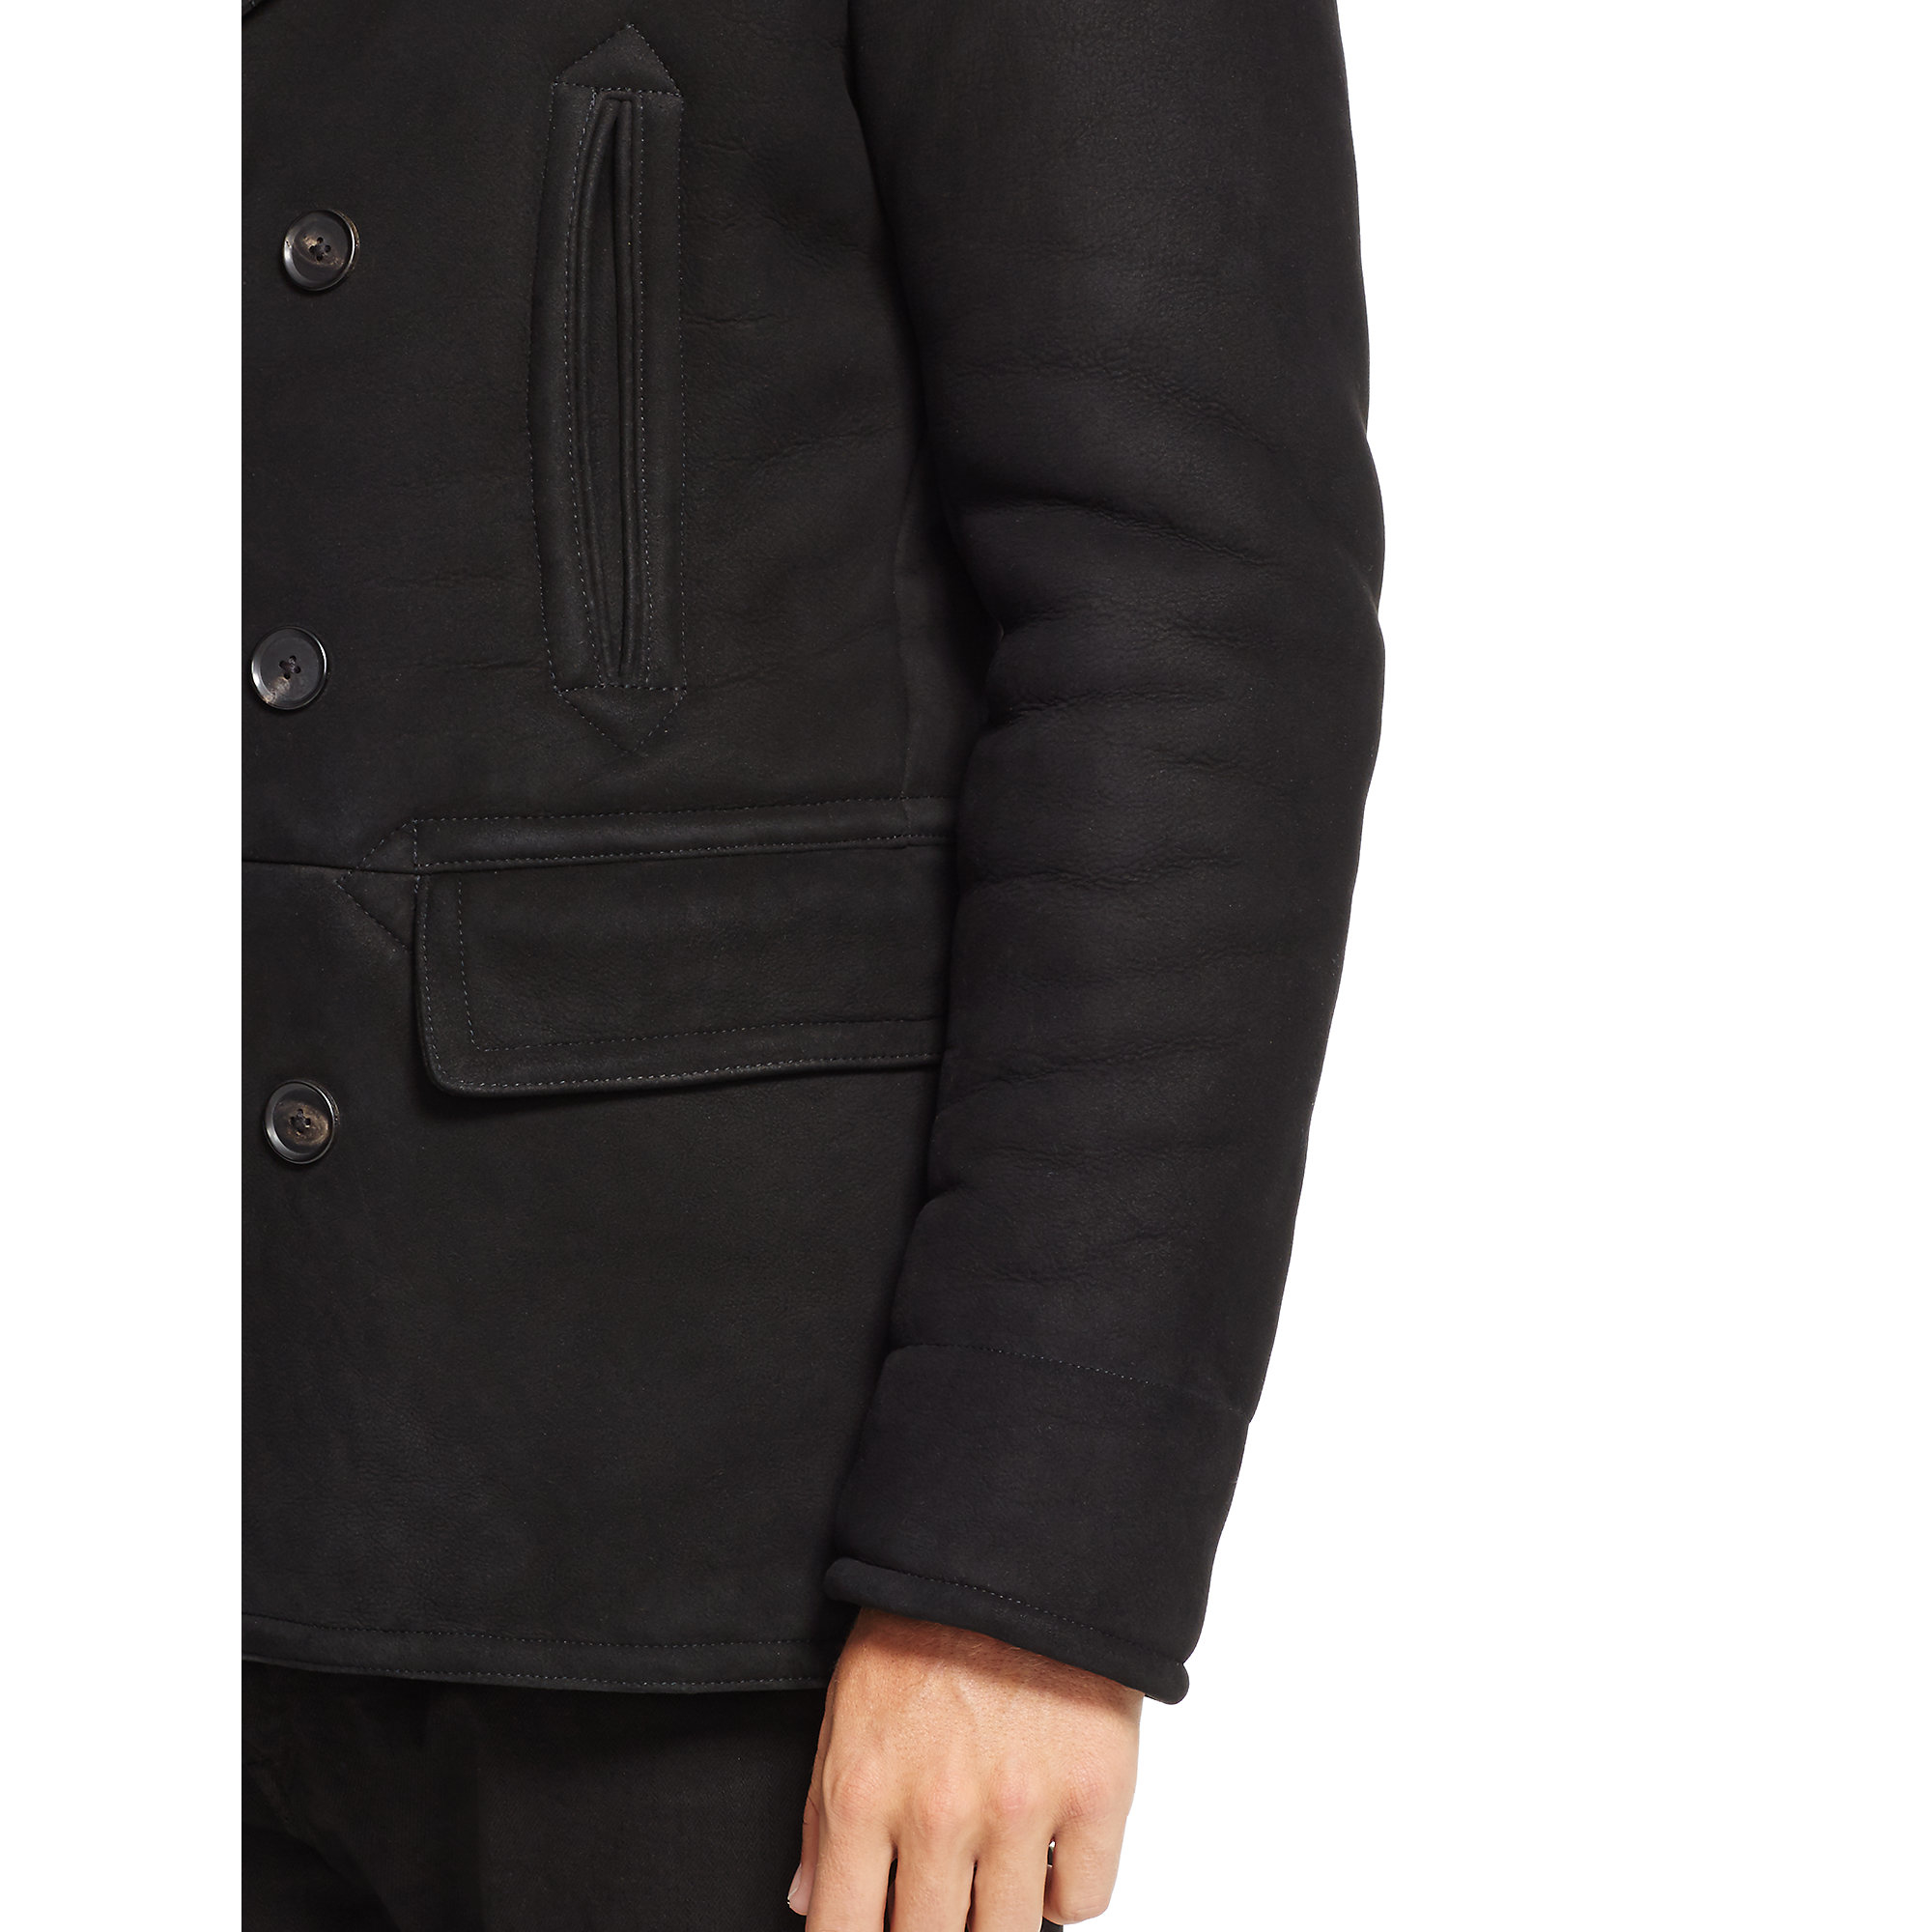 Lyst - Polo Ralph Lauren Shearling Pea Coat in Black for Men